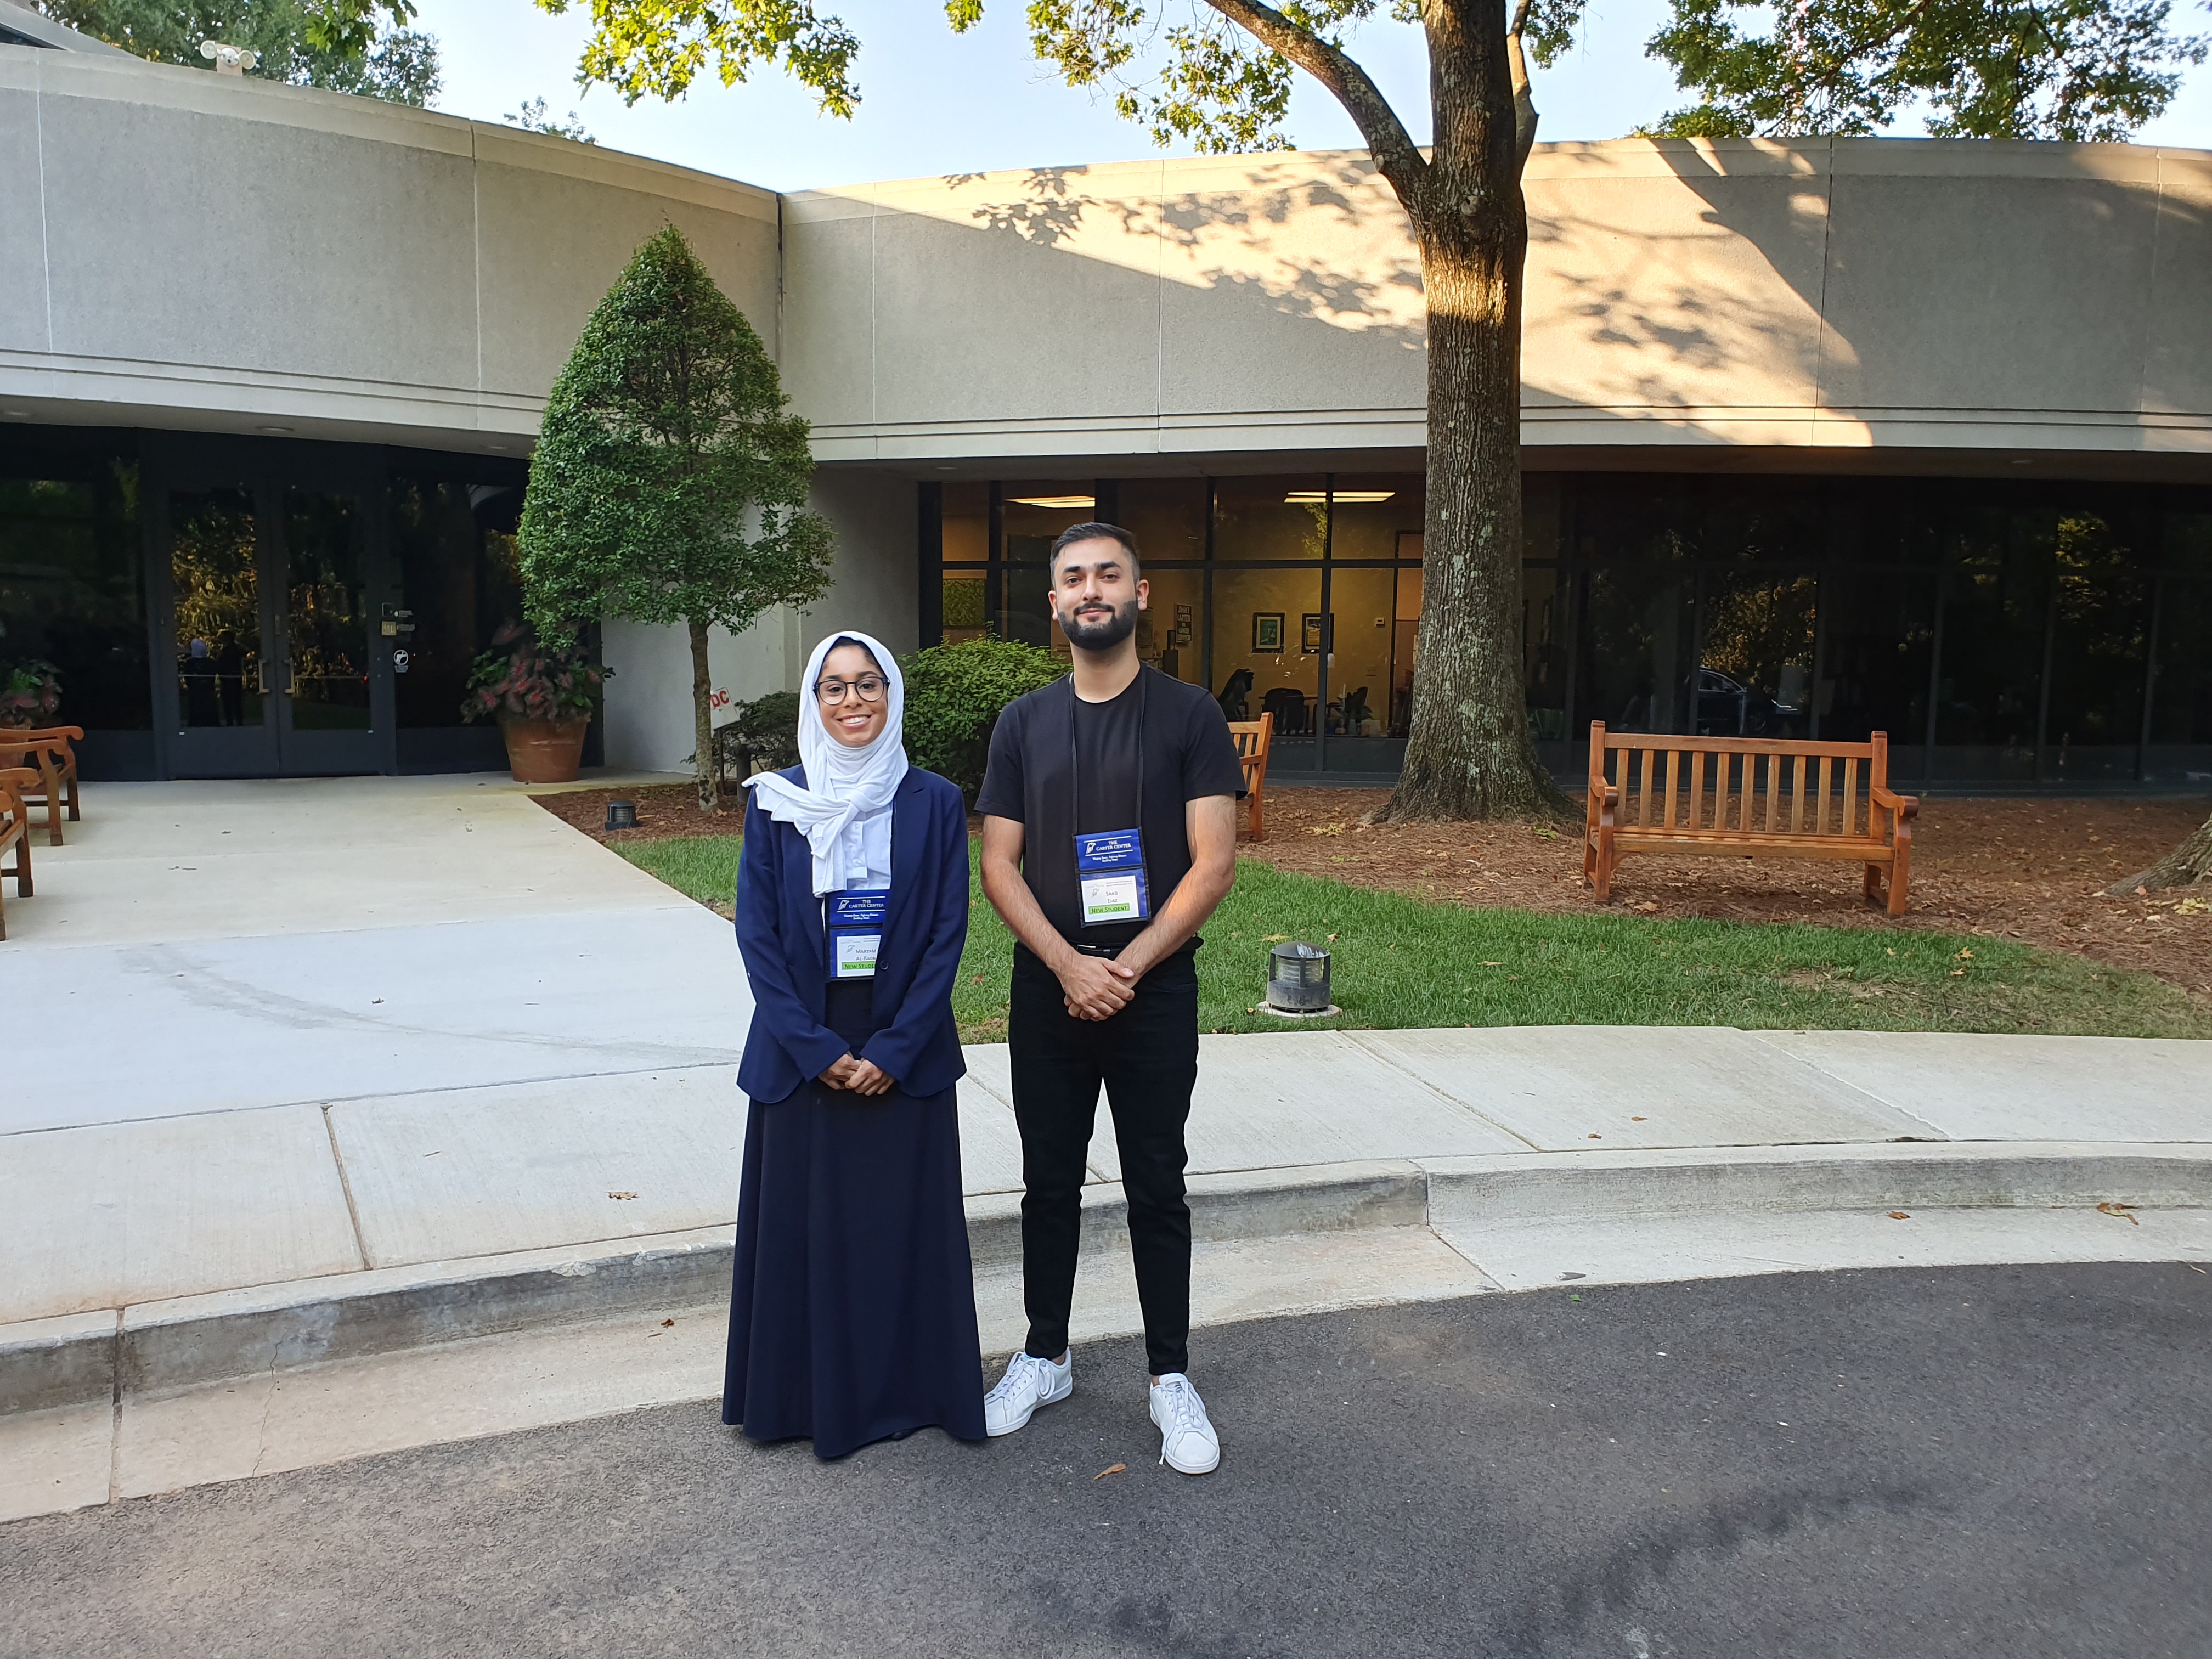 Maryam Al-Badr and Saad Ejaz during their U.S. visit as part of the Rosalynn Carter Fellowship for Mental Health Journalism Program.